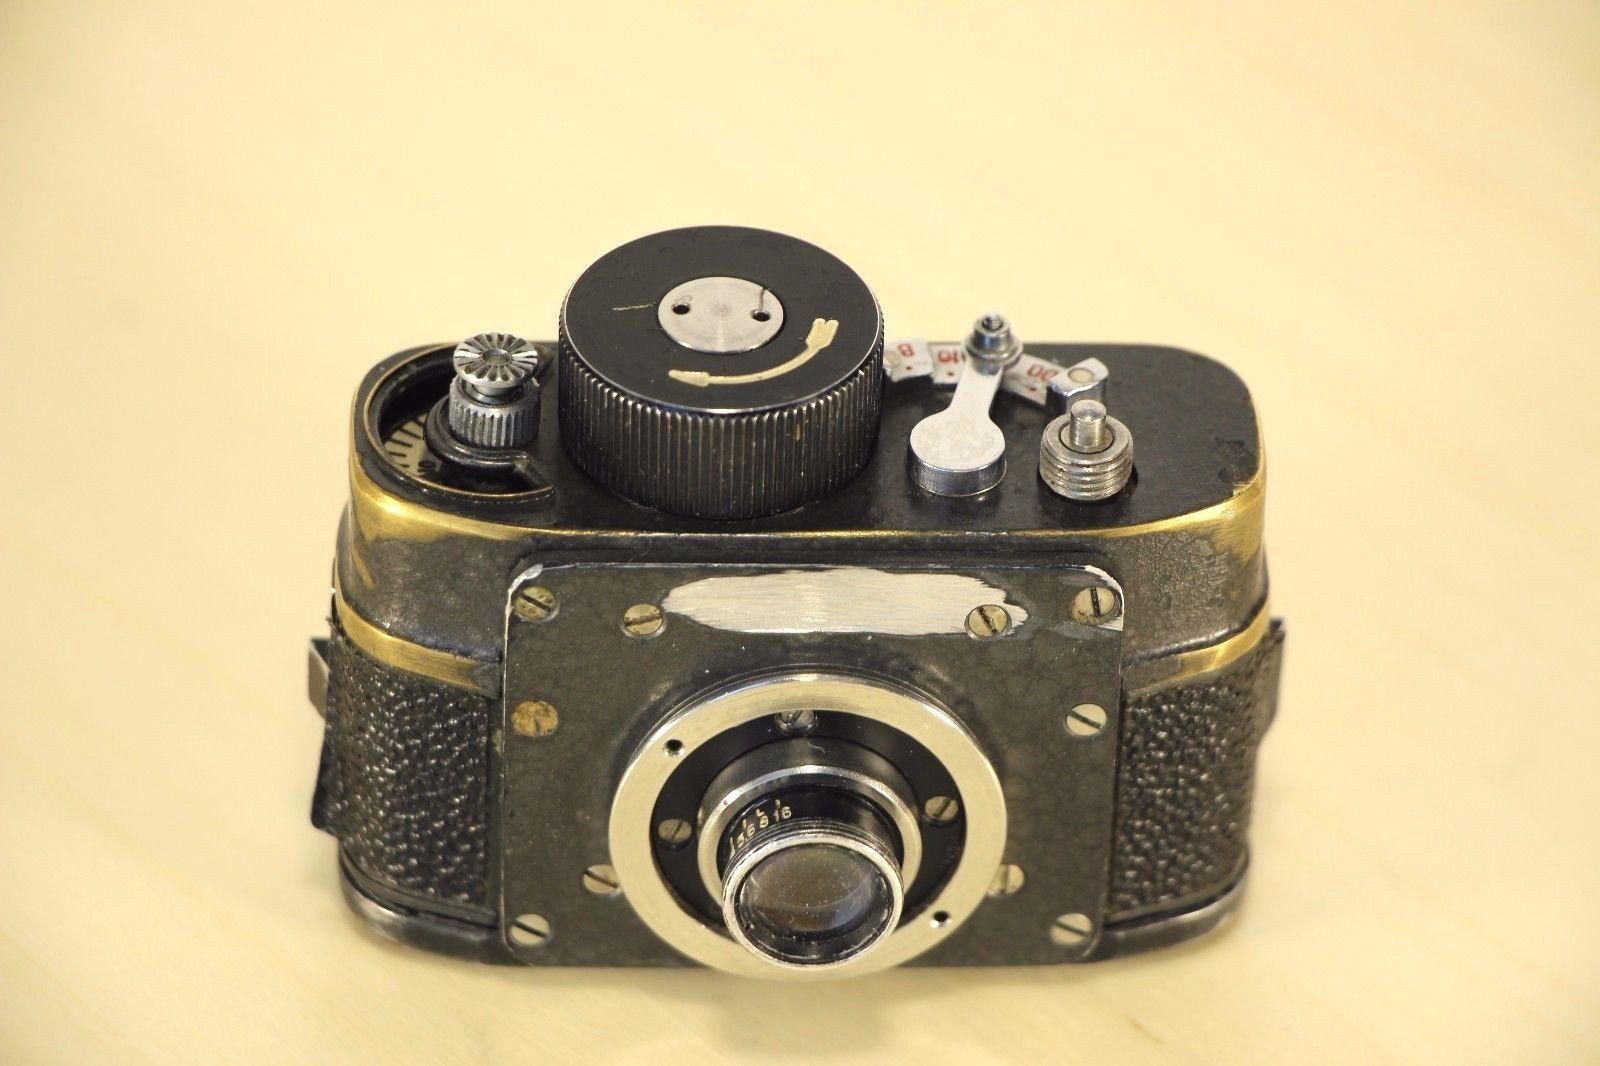 This Soviet Era Mini Spy Camera is Up for Grabs on eBay